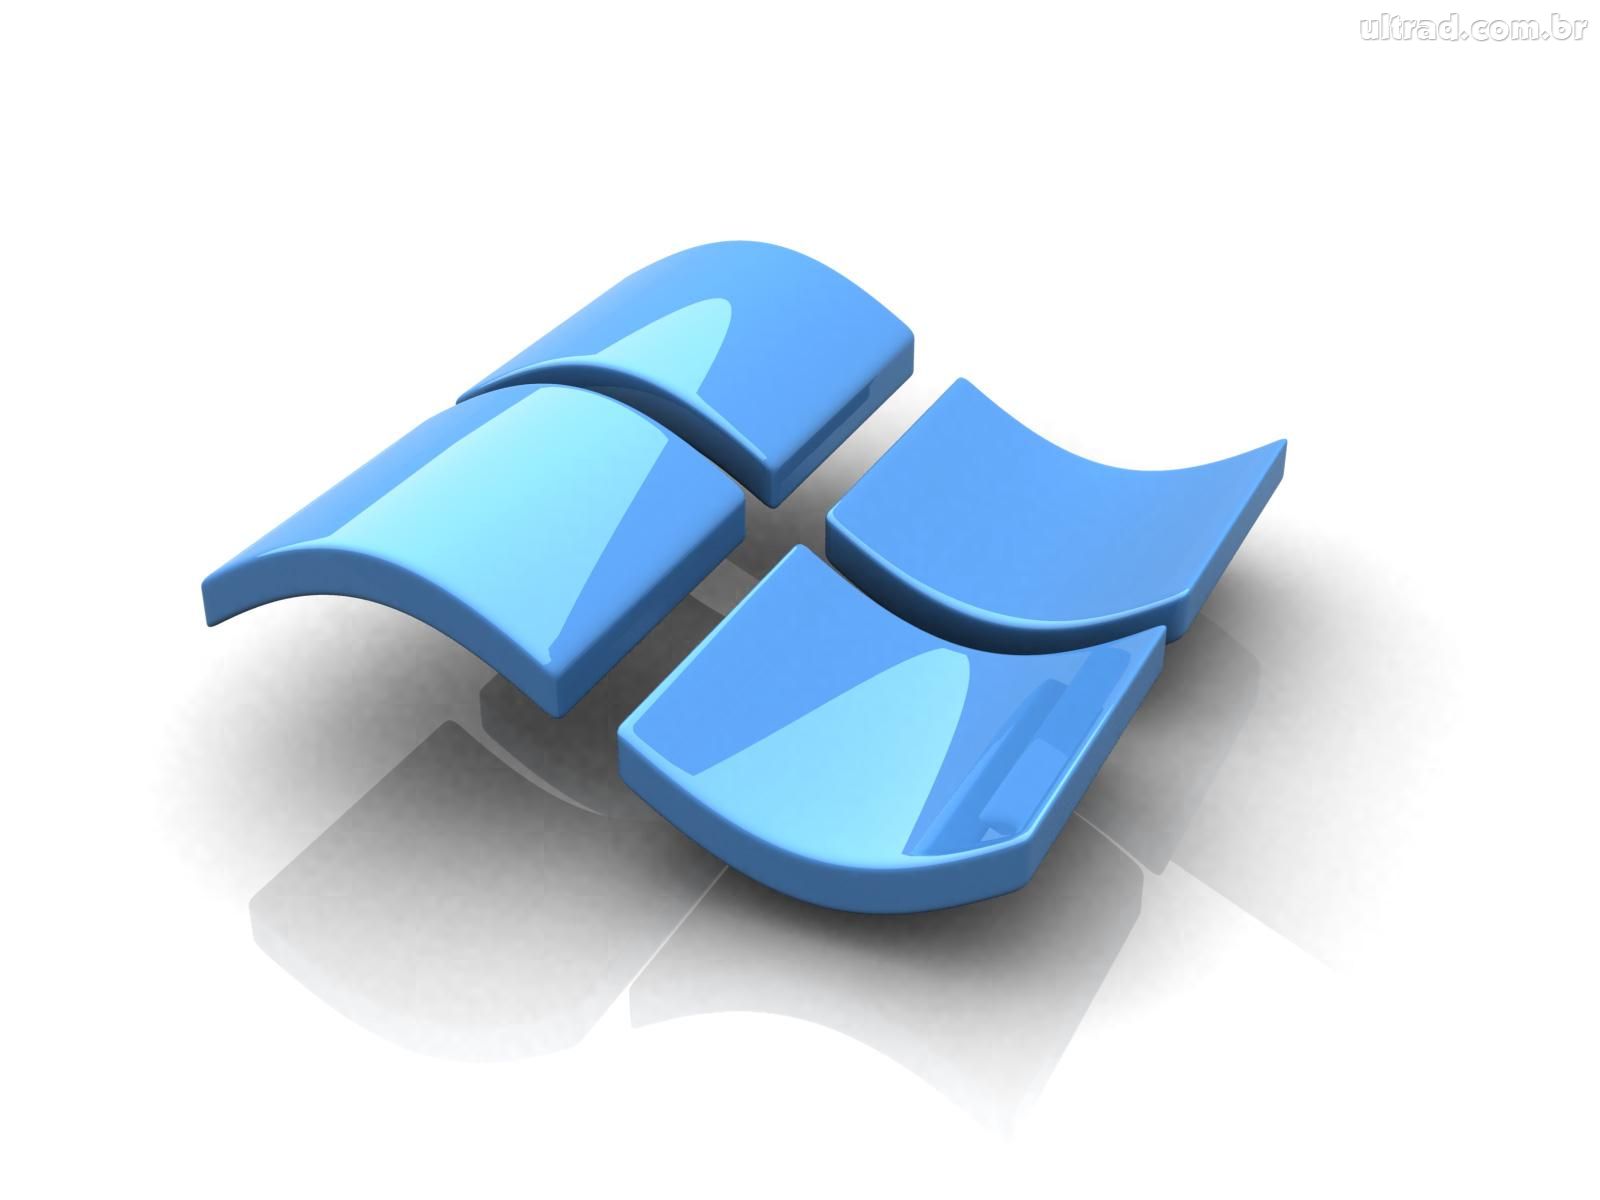  windows microsoft windows logo logo do windows microsoft windows logos 1600x1200